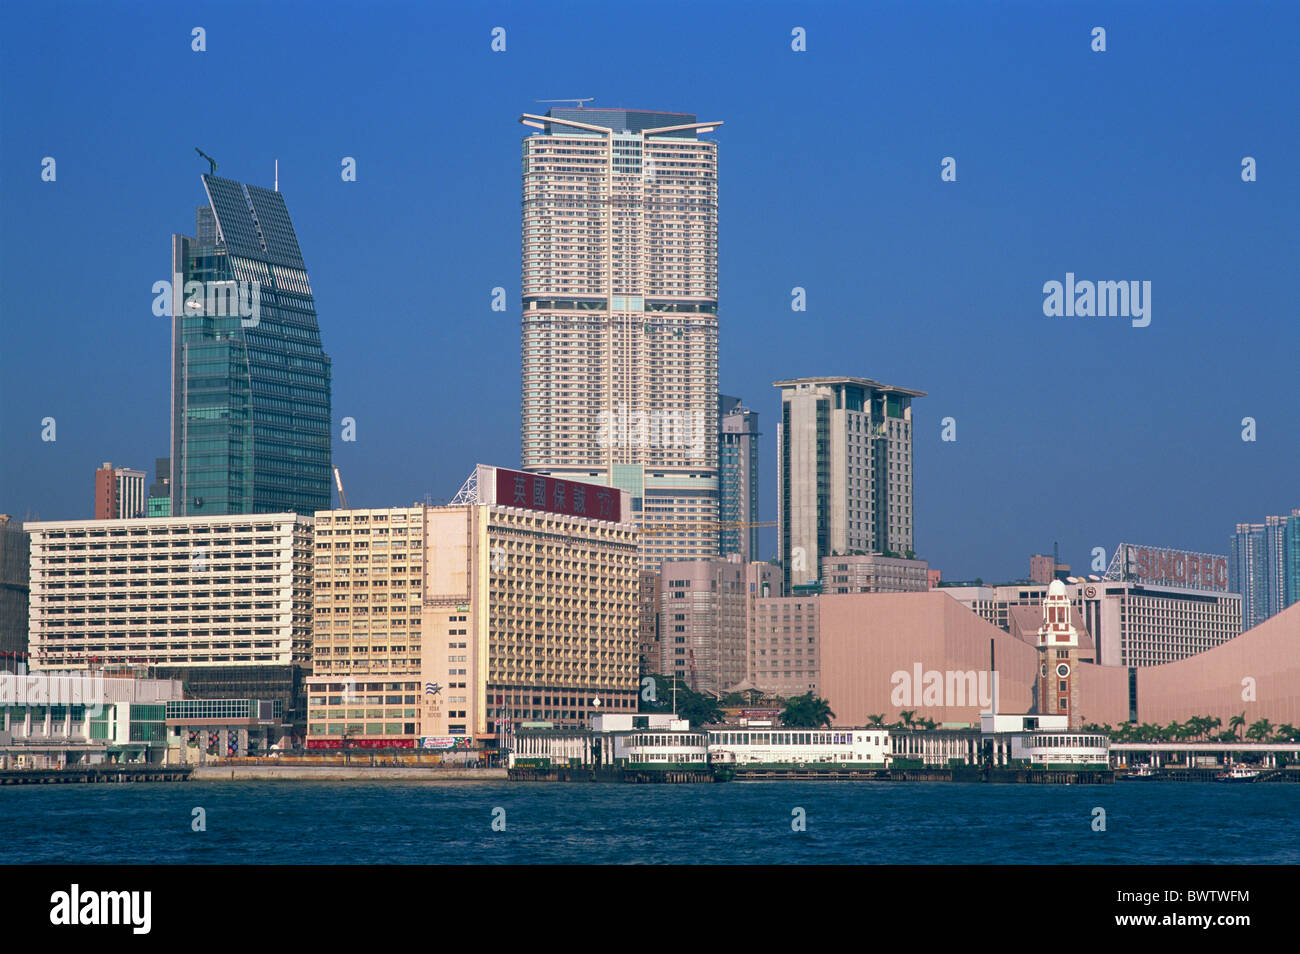 China Asien Hong Kong Asia Kowloon Tsim Sha Tsui Skyline Stadtbild Wolkenkratzer moderne Gebäude-Architektur Stockfoto